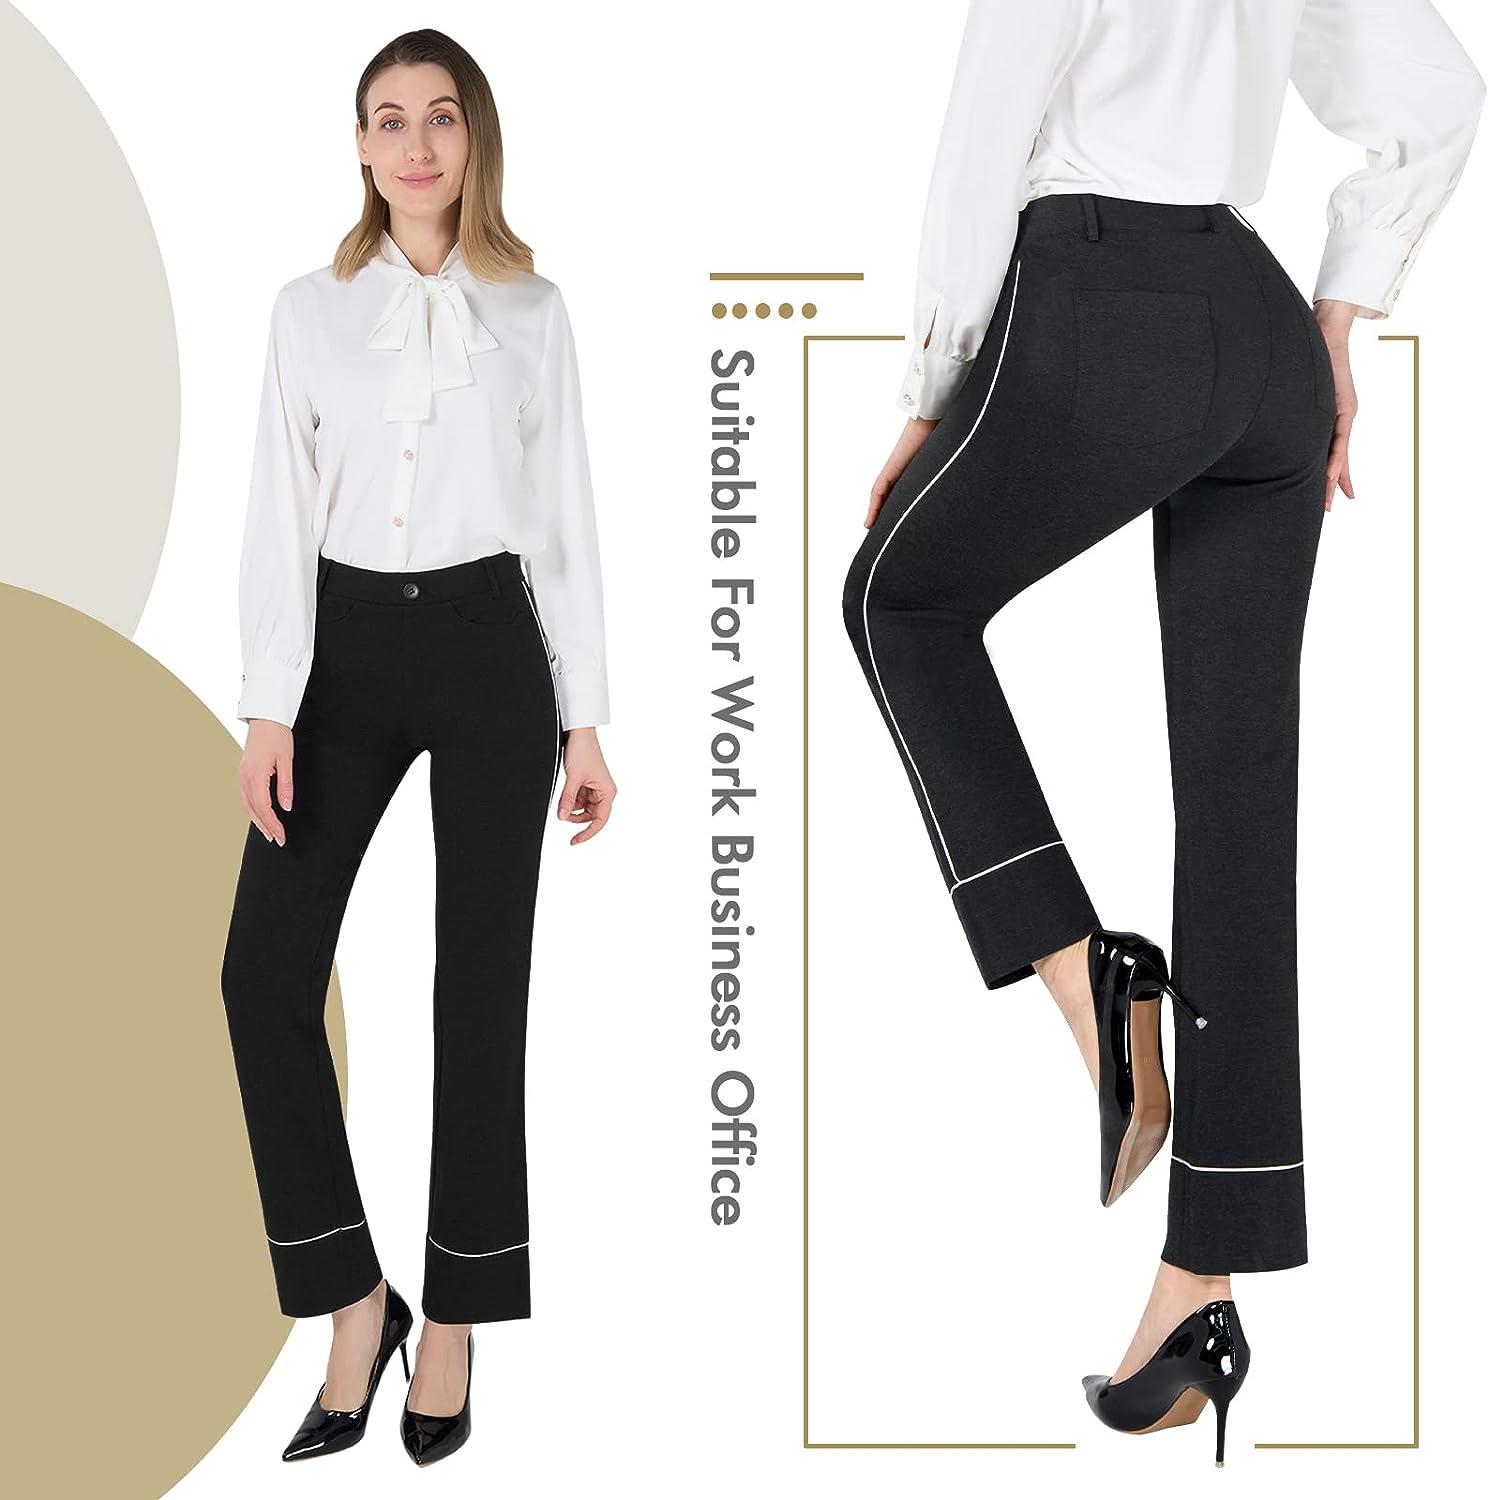 Pants & Jeans For Women - Casual & Dress Pants